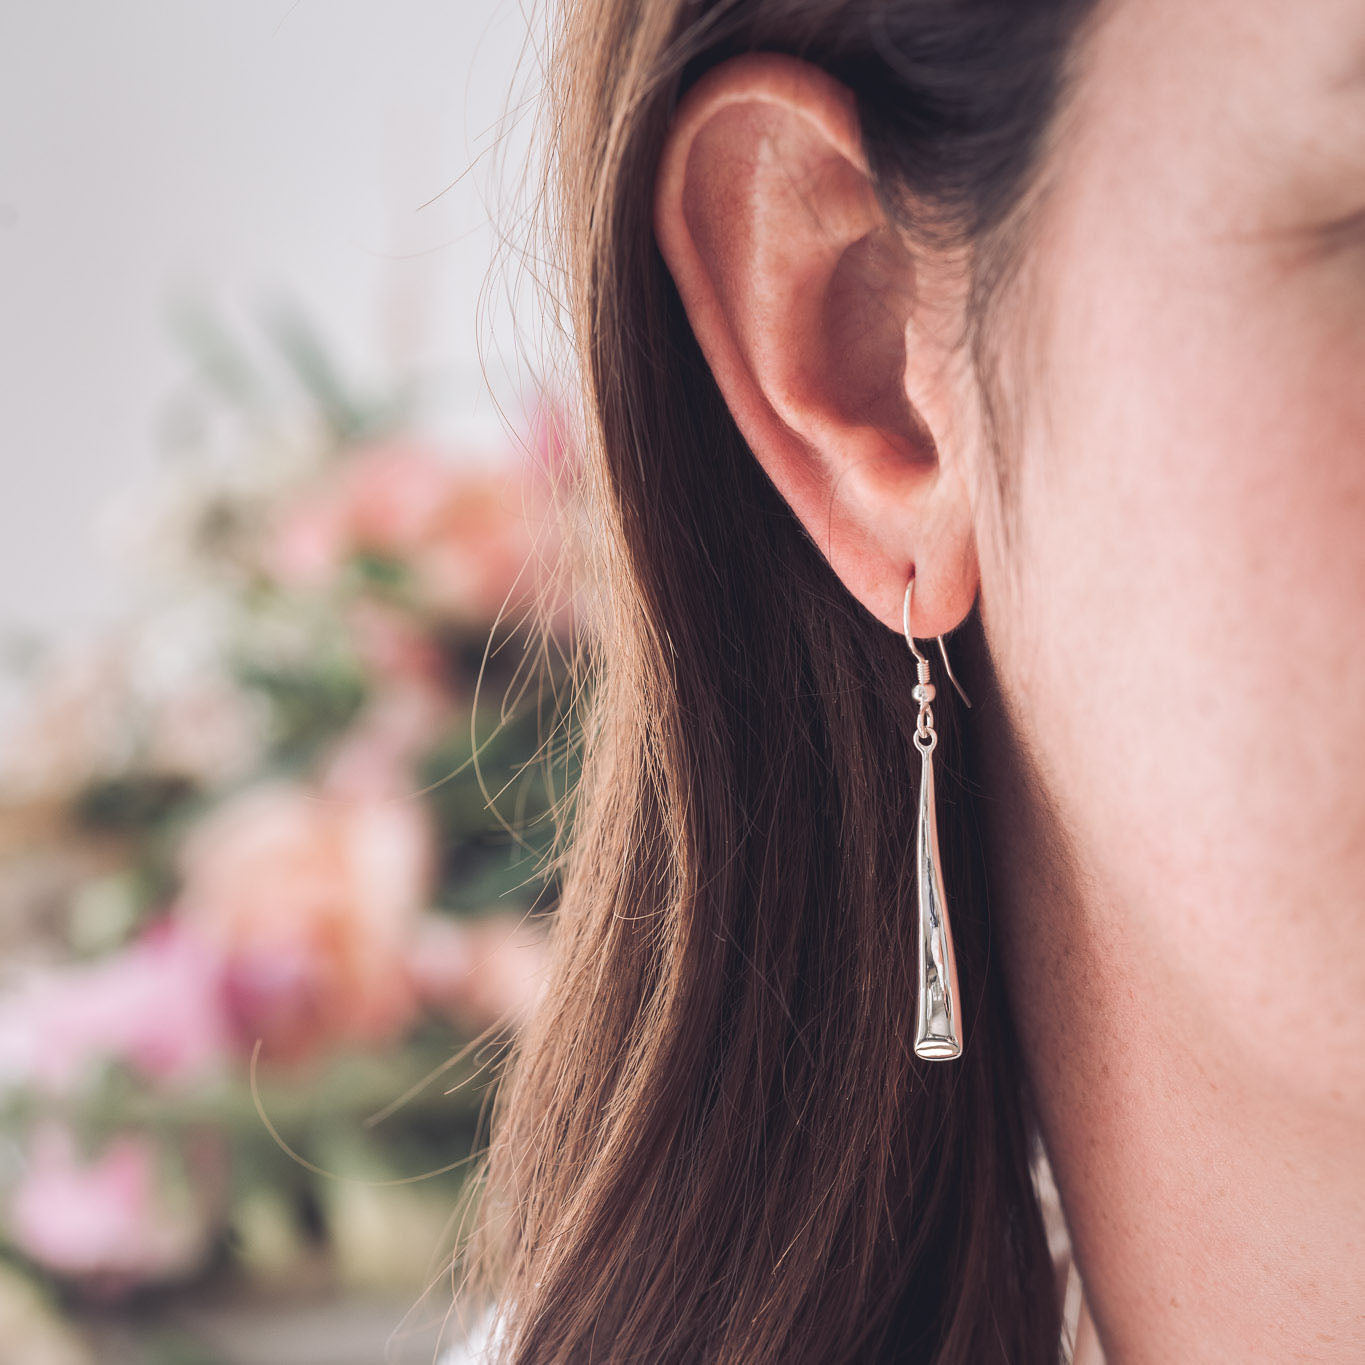 Handcrafted Silver Drop earrings